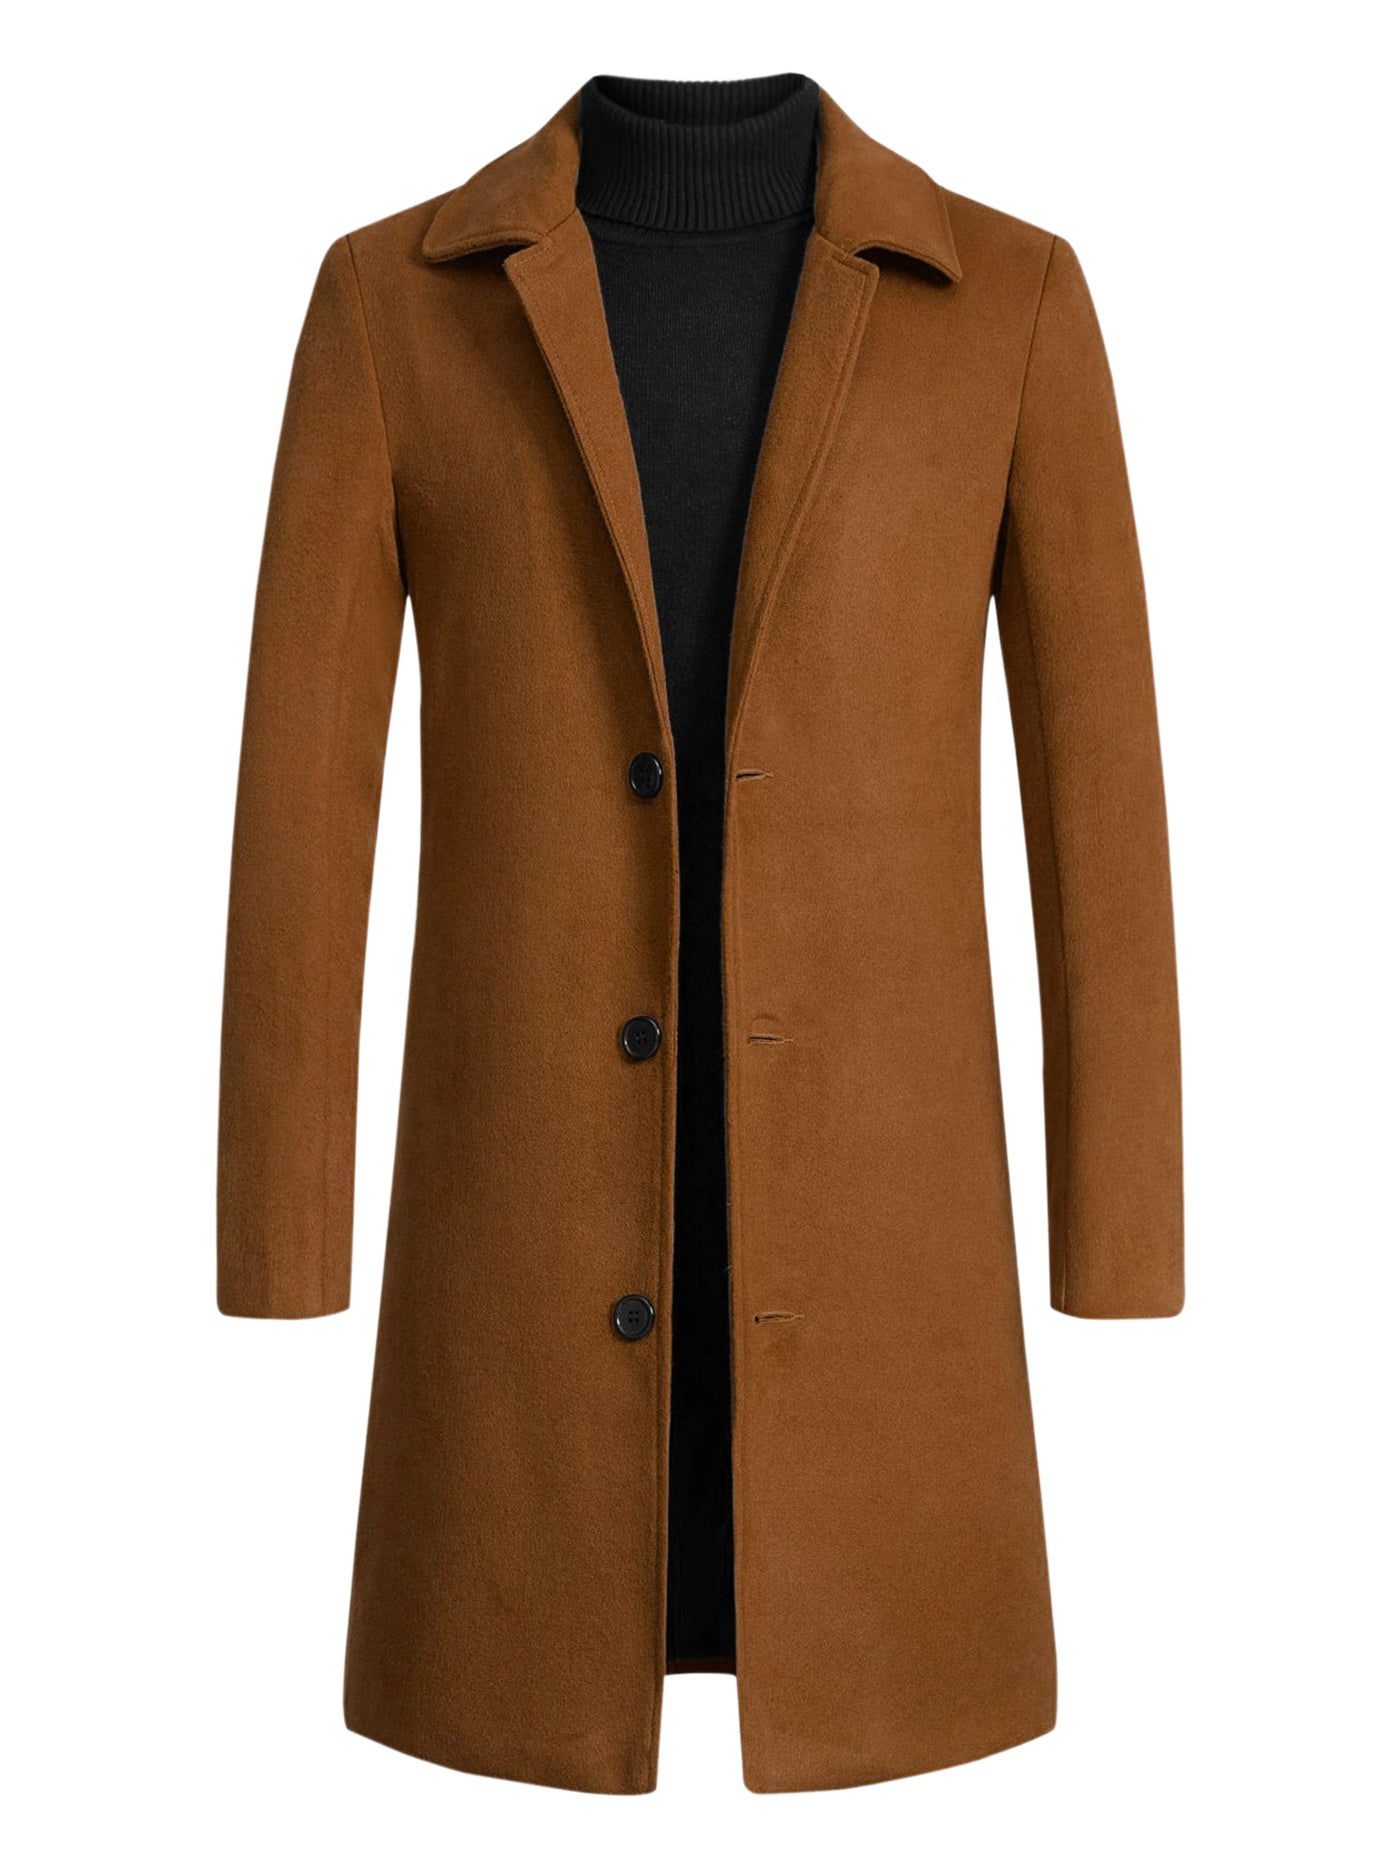 Bublédon Men's Winter Pea Coat Slim Fit Single Breasted Long Trench Coats Overcoat